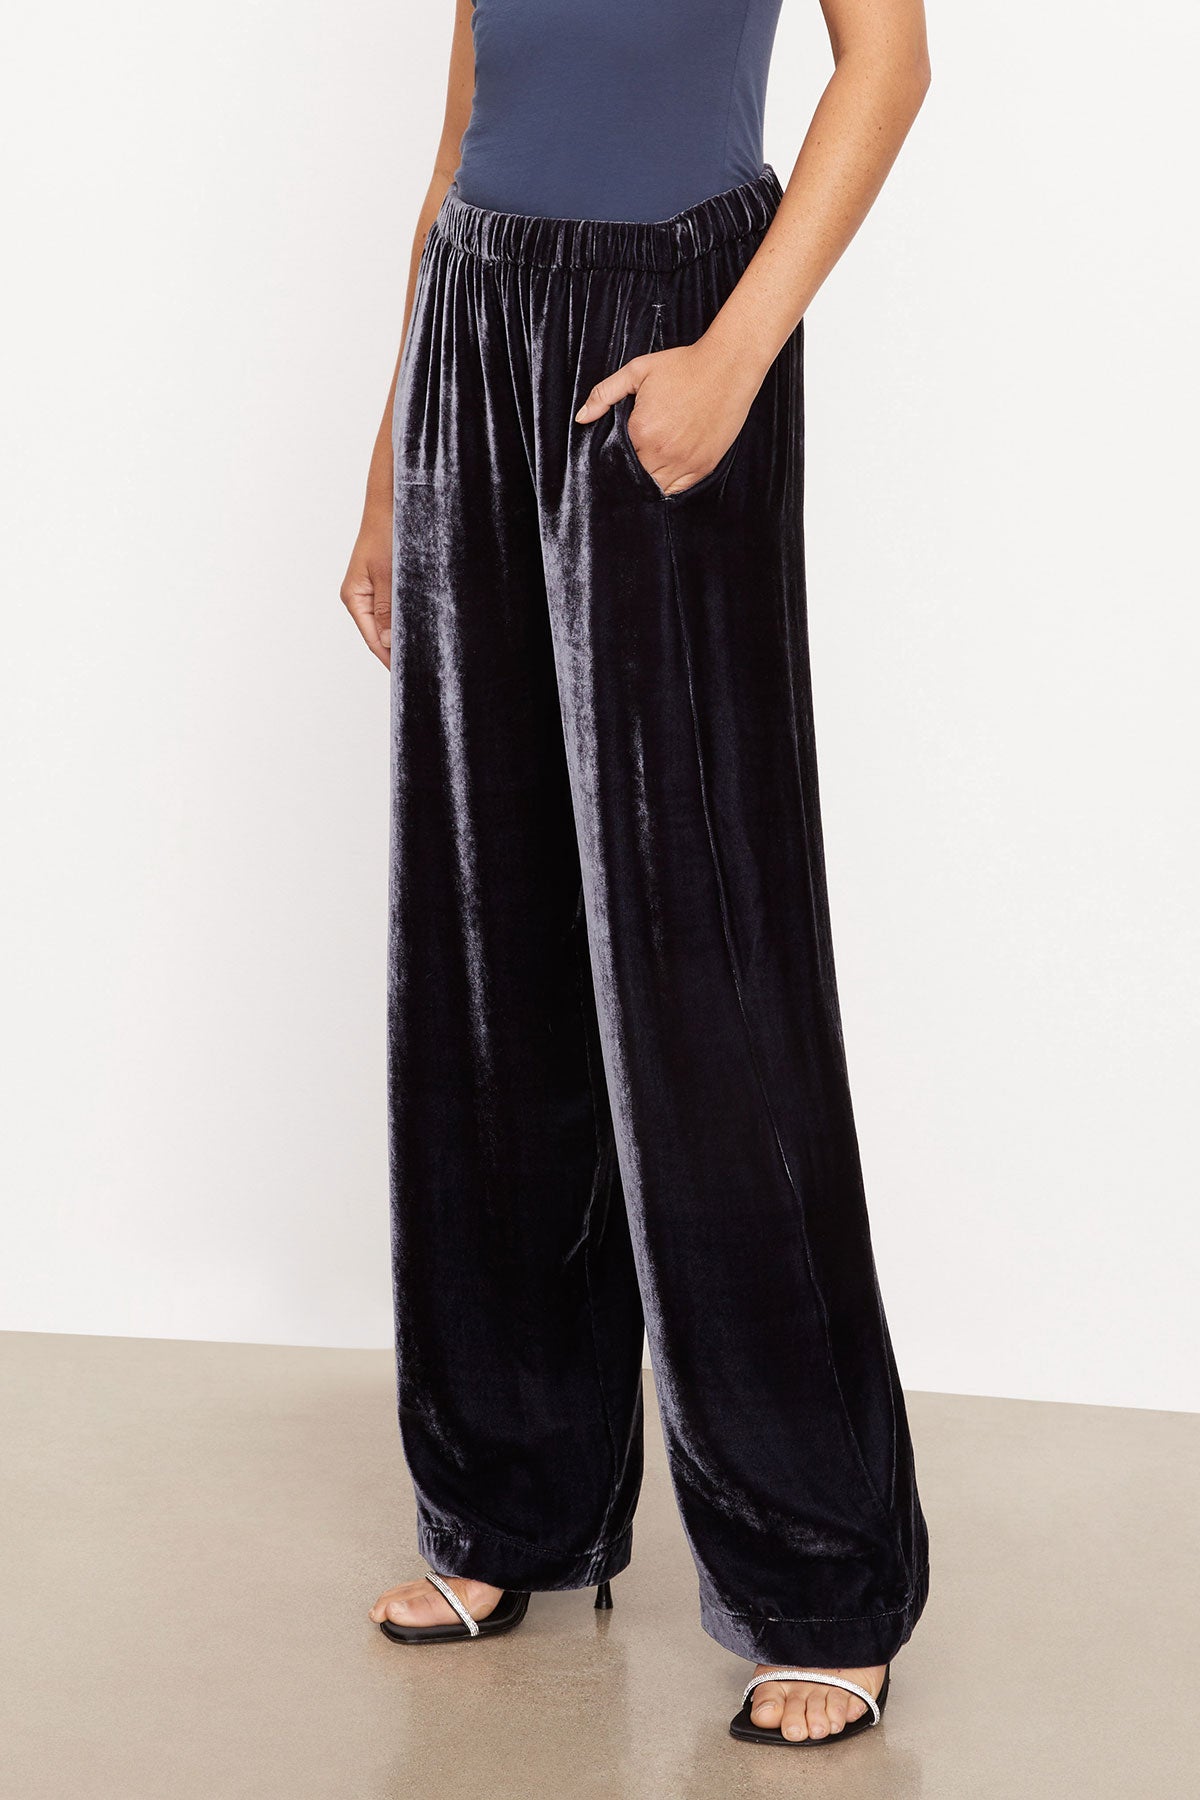 Proenza Schouler | Silk Velvet Trouser in Blue justoneeye.com